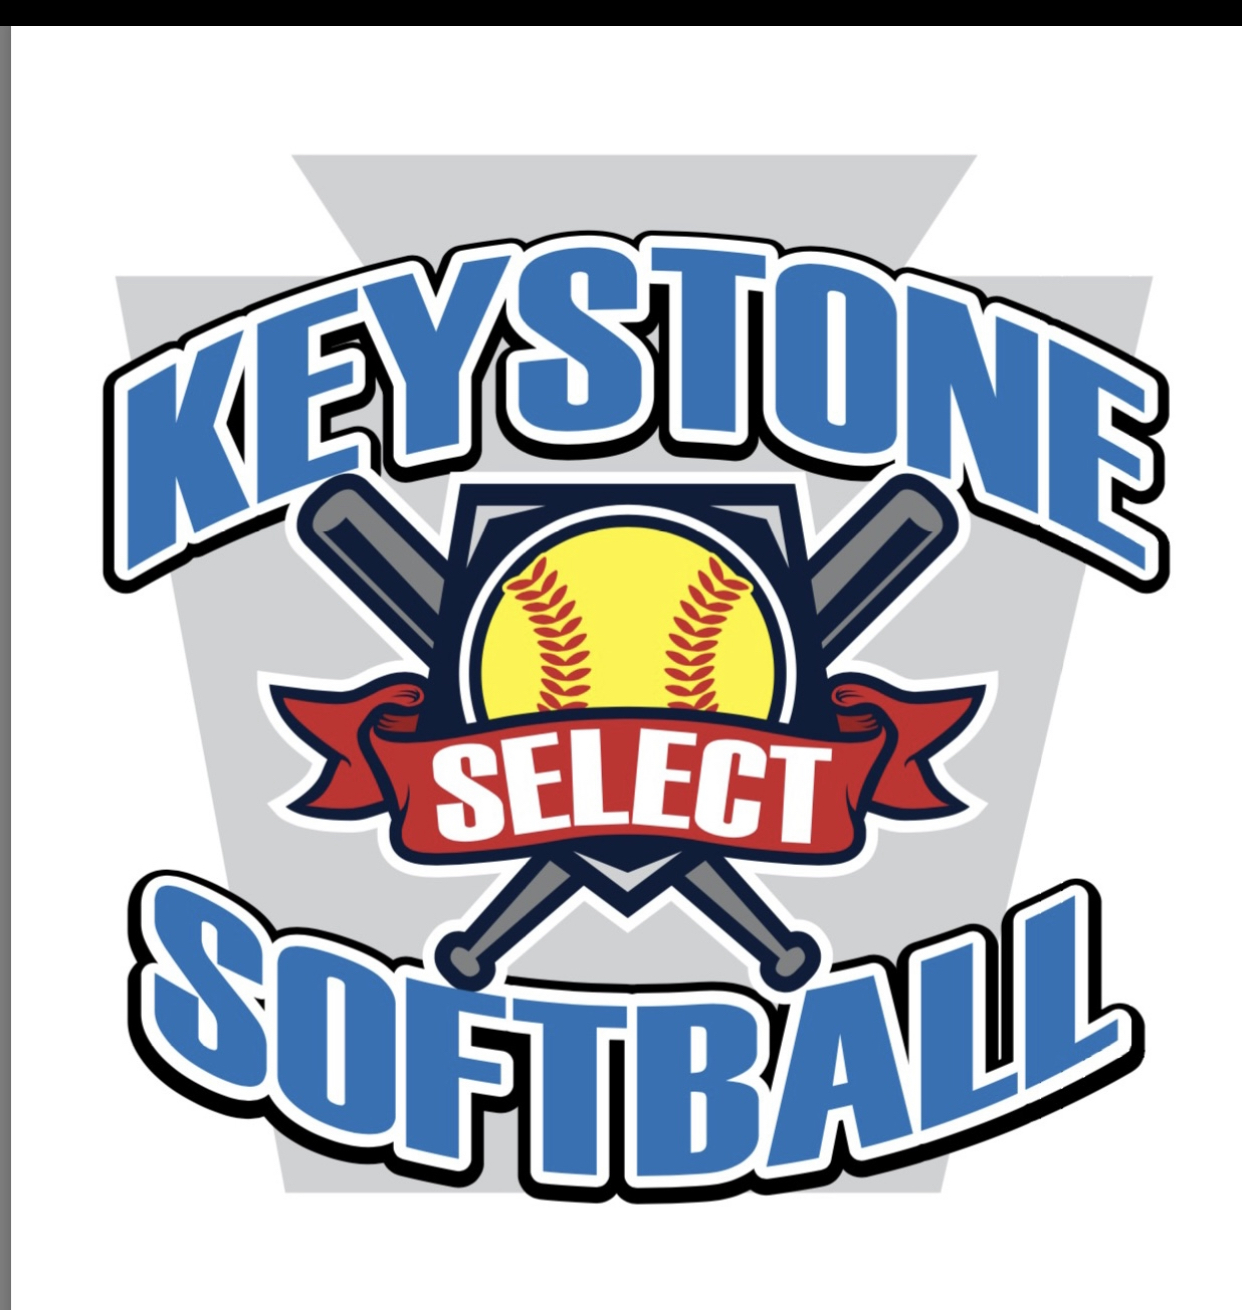 Keystone Select Softball Turn Two Tournament Williamsport Area Logo